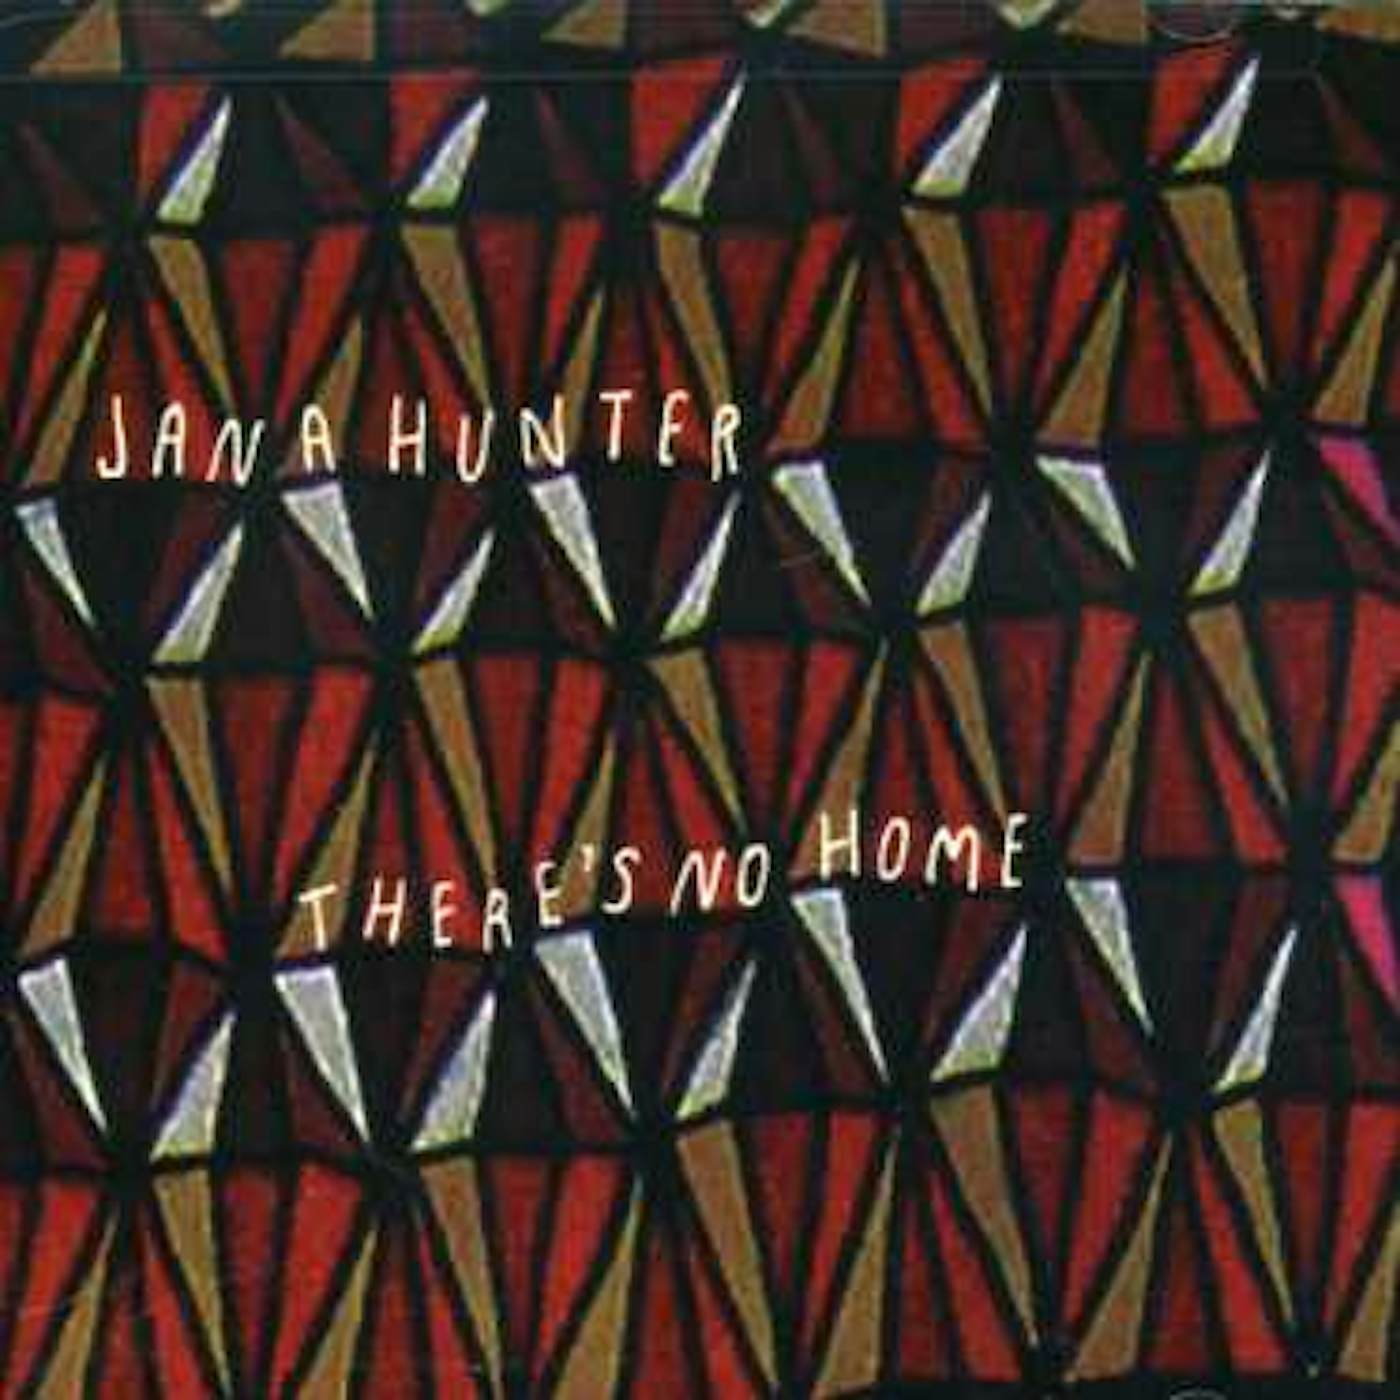 Jana Hunter THERE'S NO HOME CD